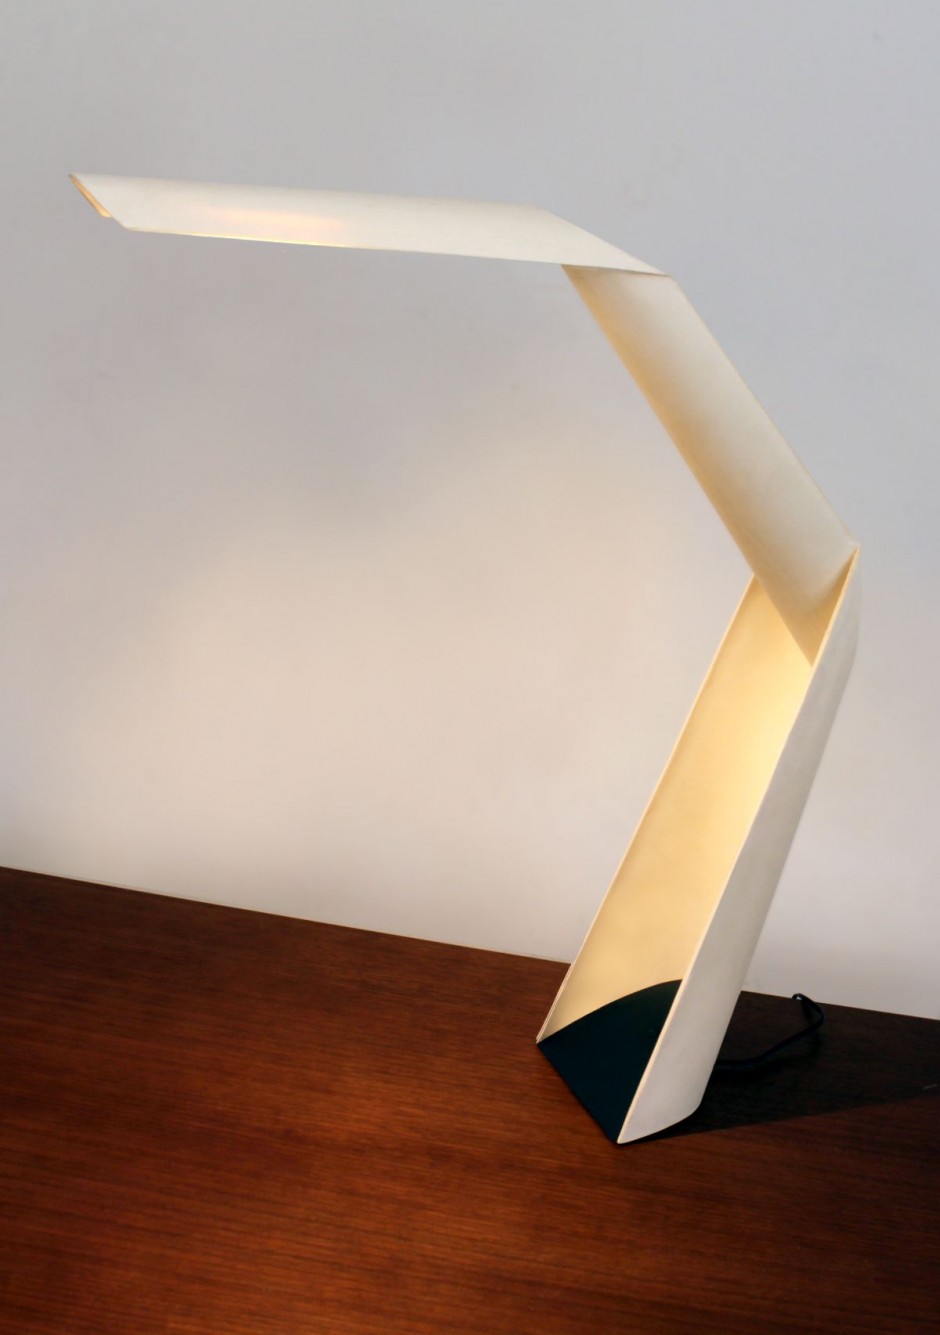 The W101 Lamp by Claesson Koivisto Rune for Wästberg